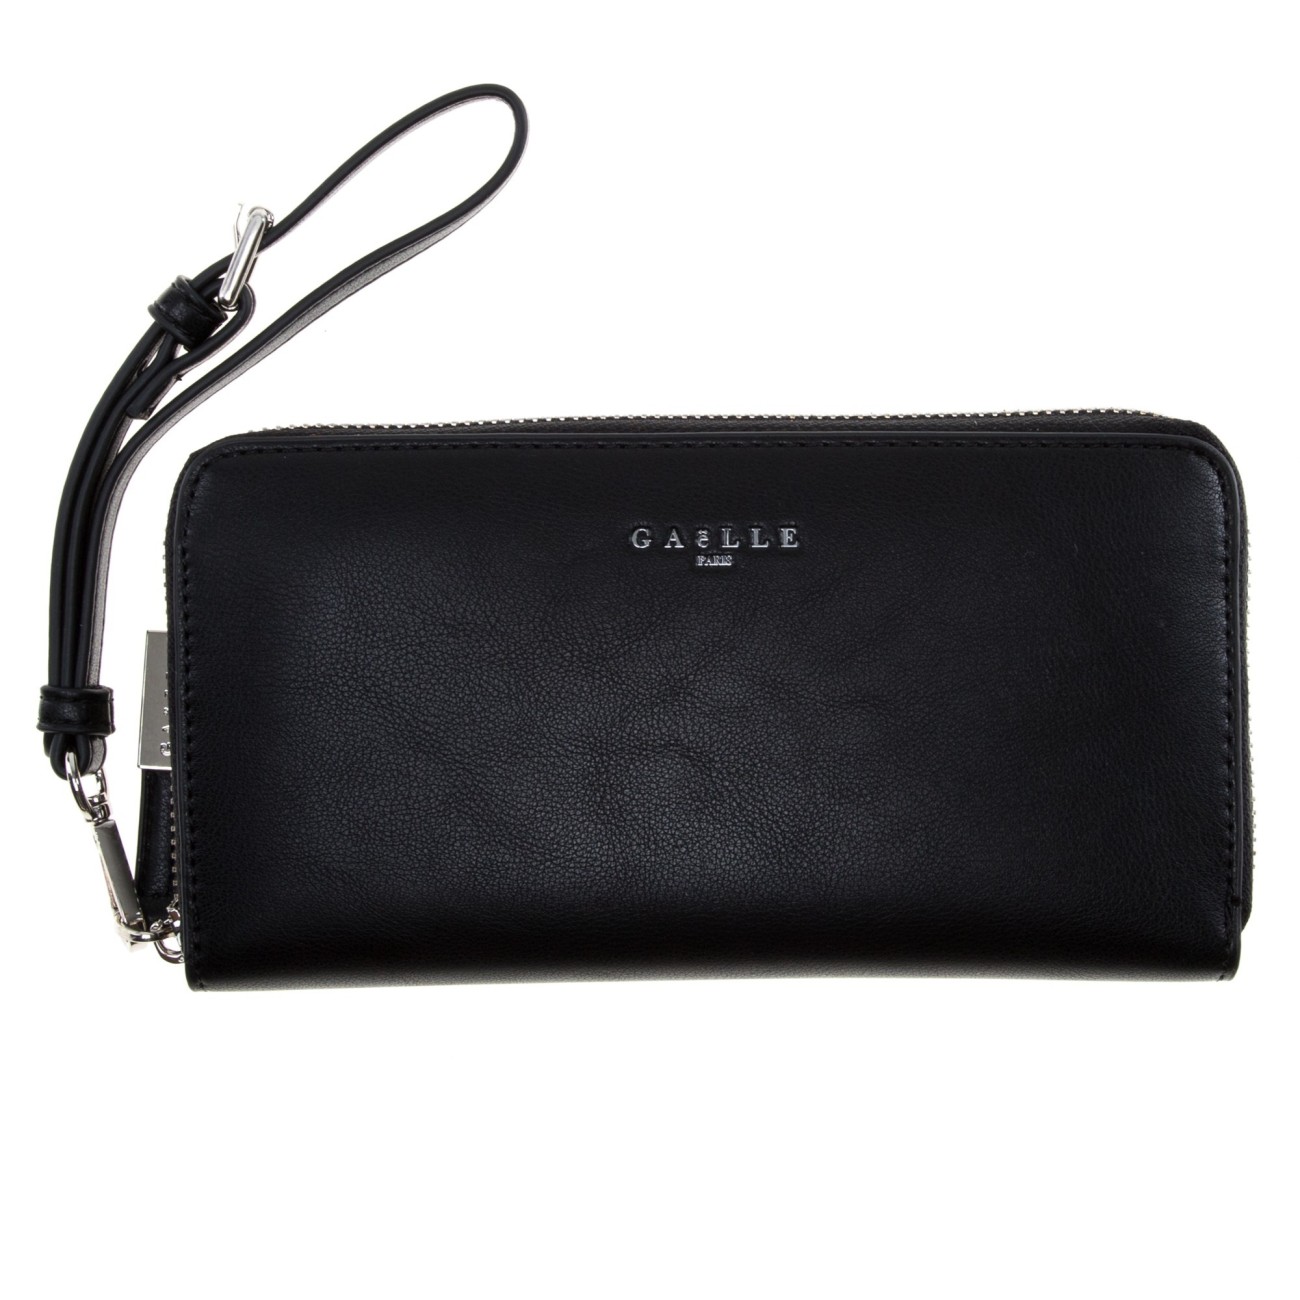 Gaelle classic black wallet...